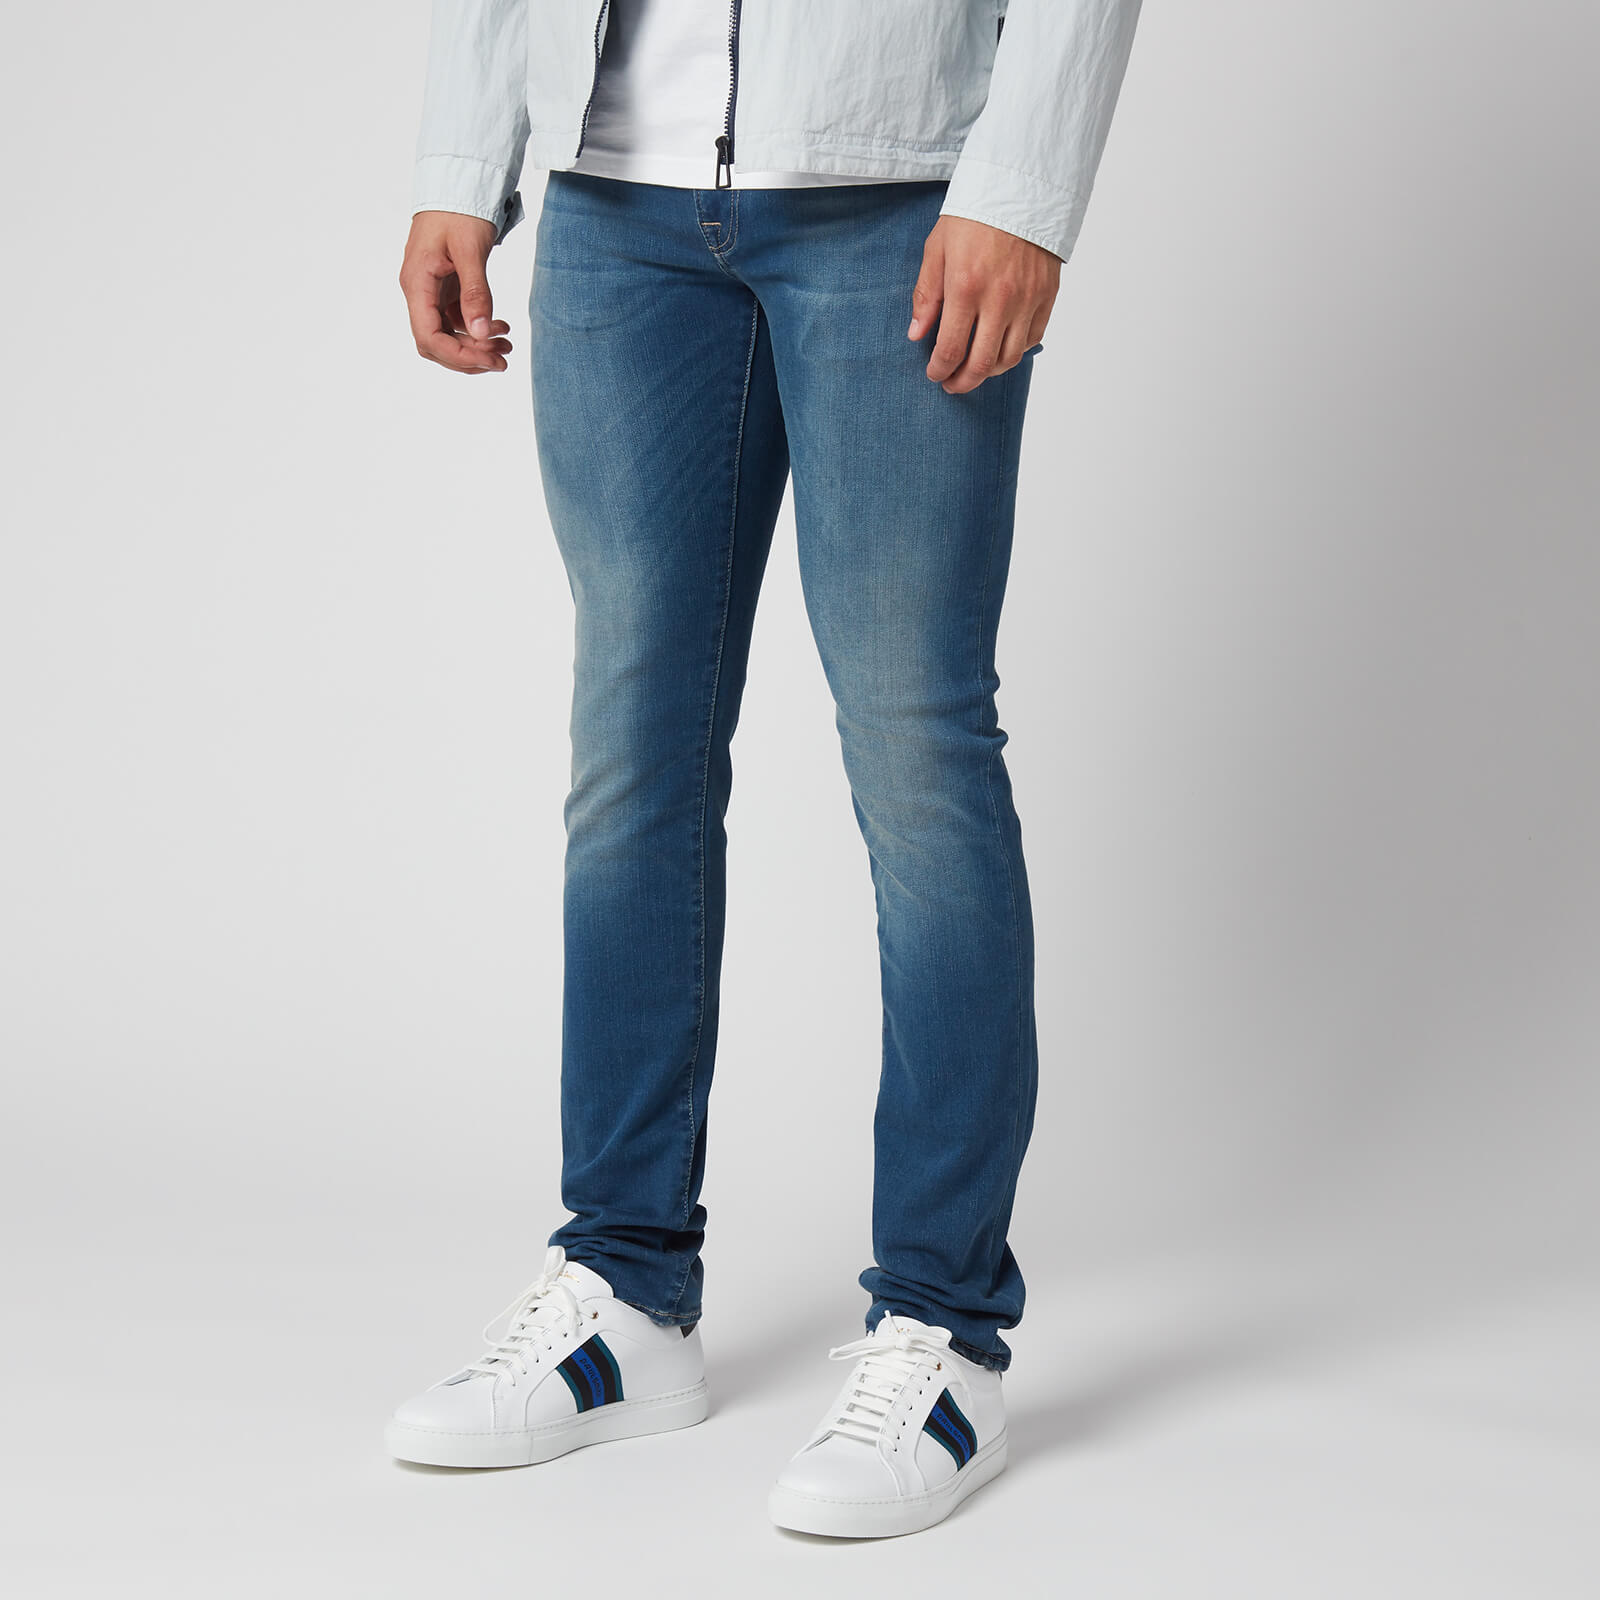 Tramarossa Men's Leonardo Slim 5 Pocket Jeans - 18 Months - W38